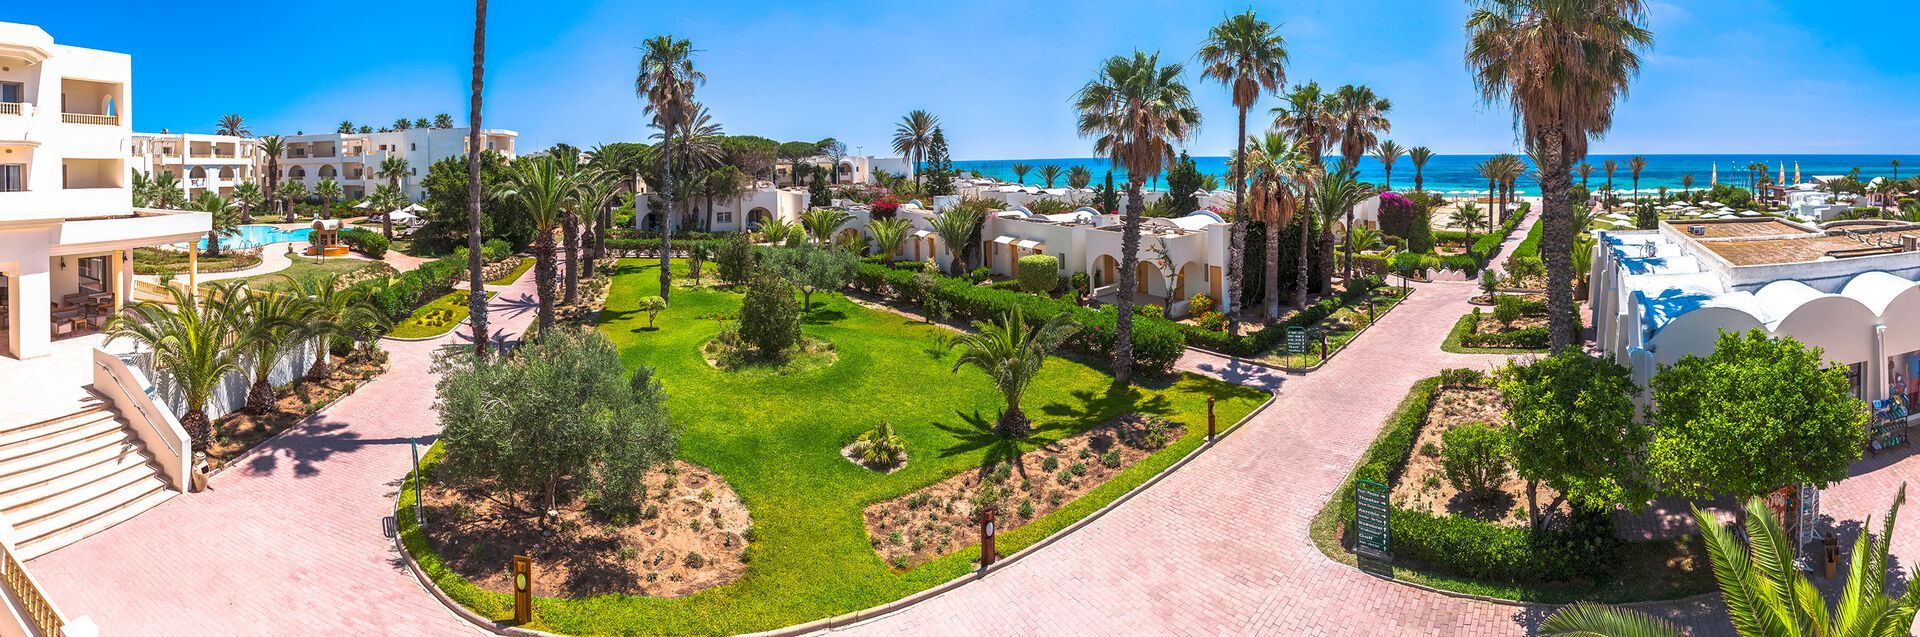 Tunisie - Nabeul - Hotel Calimera Delfino Beach Resort & Spa 4*